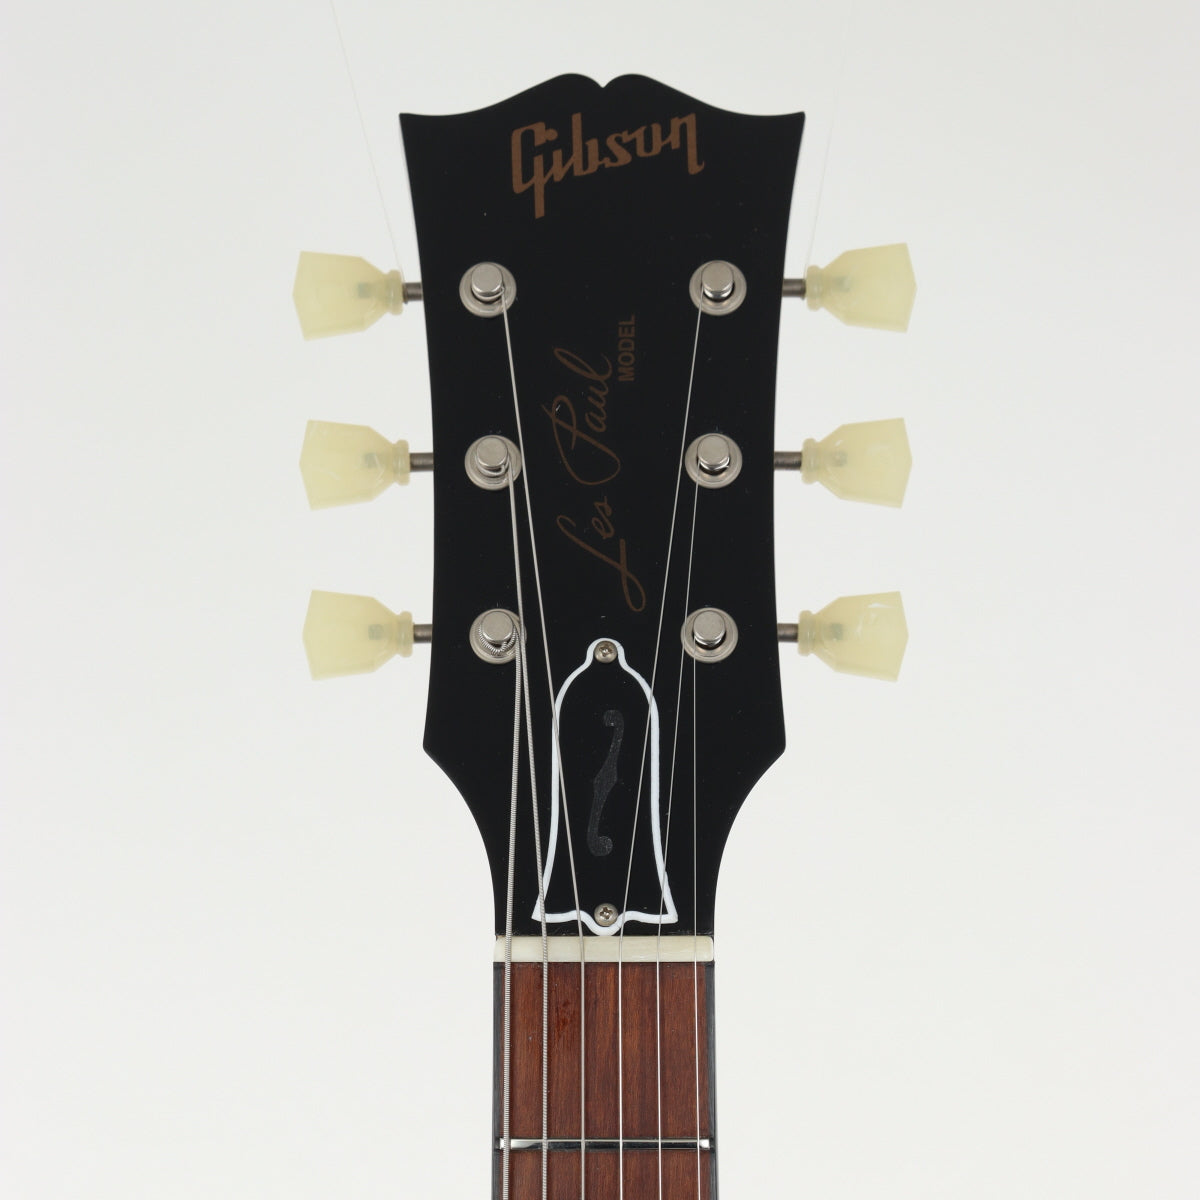 [SN 11266741] USED Gibson Memphis Gibson Memphis / ES-Les Paul Special Iced Tea Burst [20]